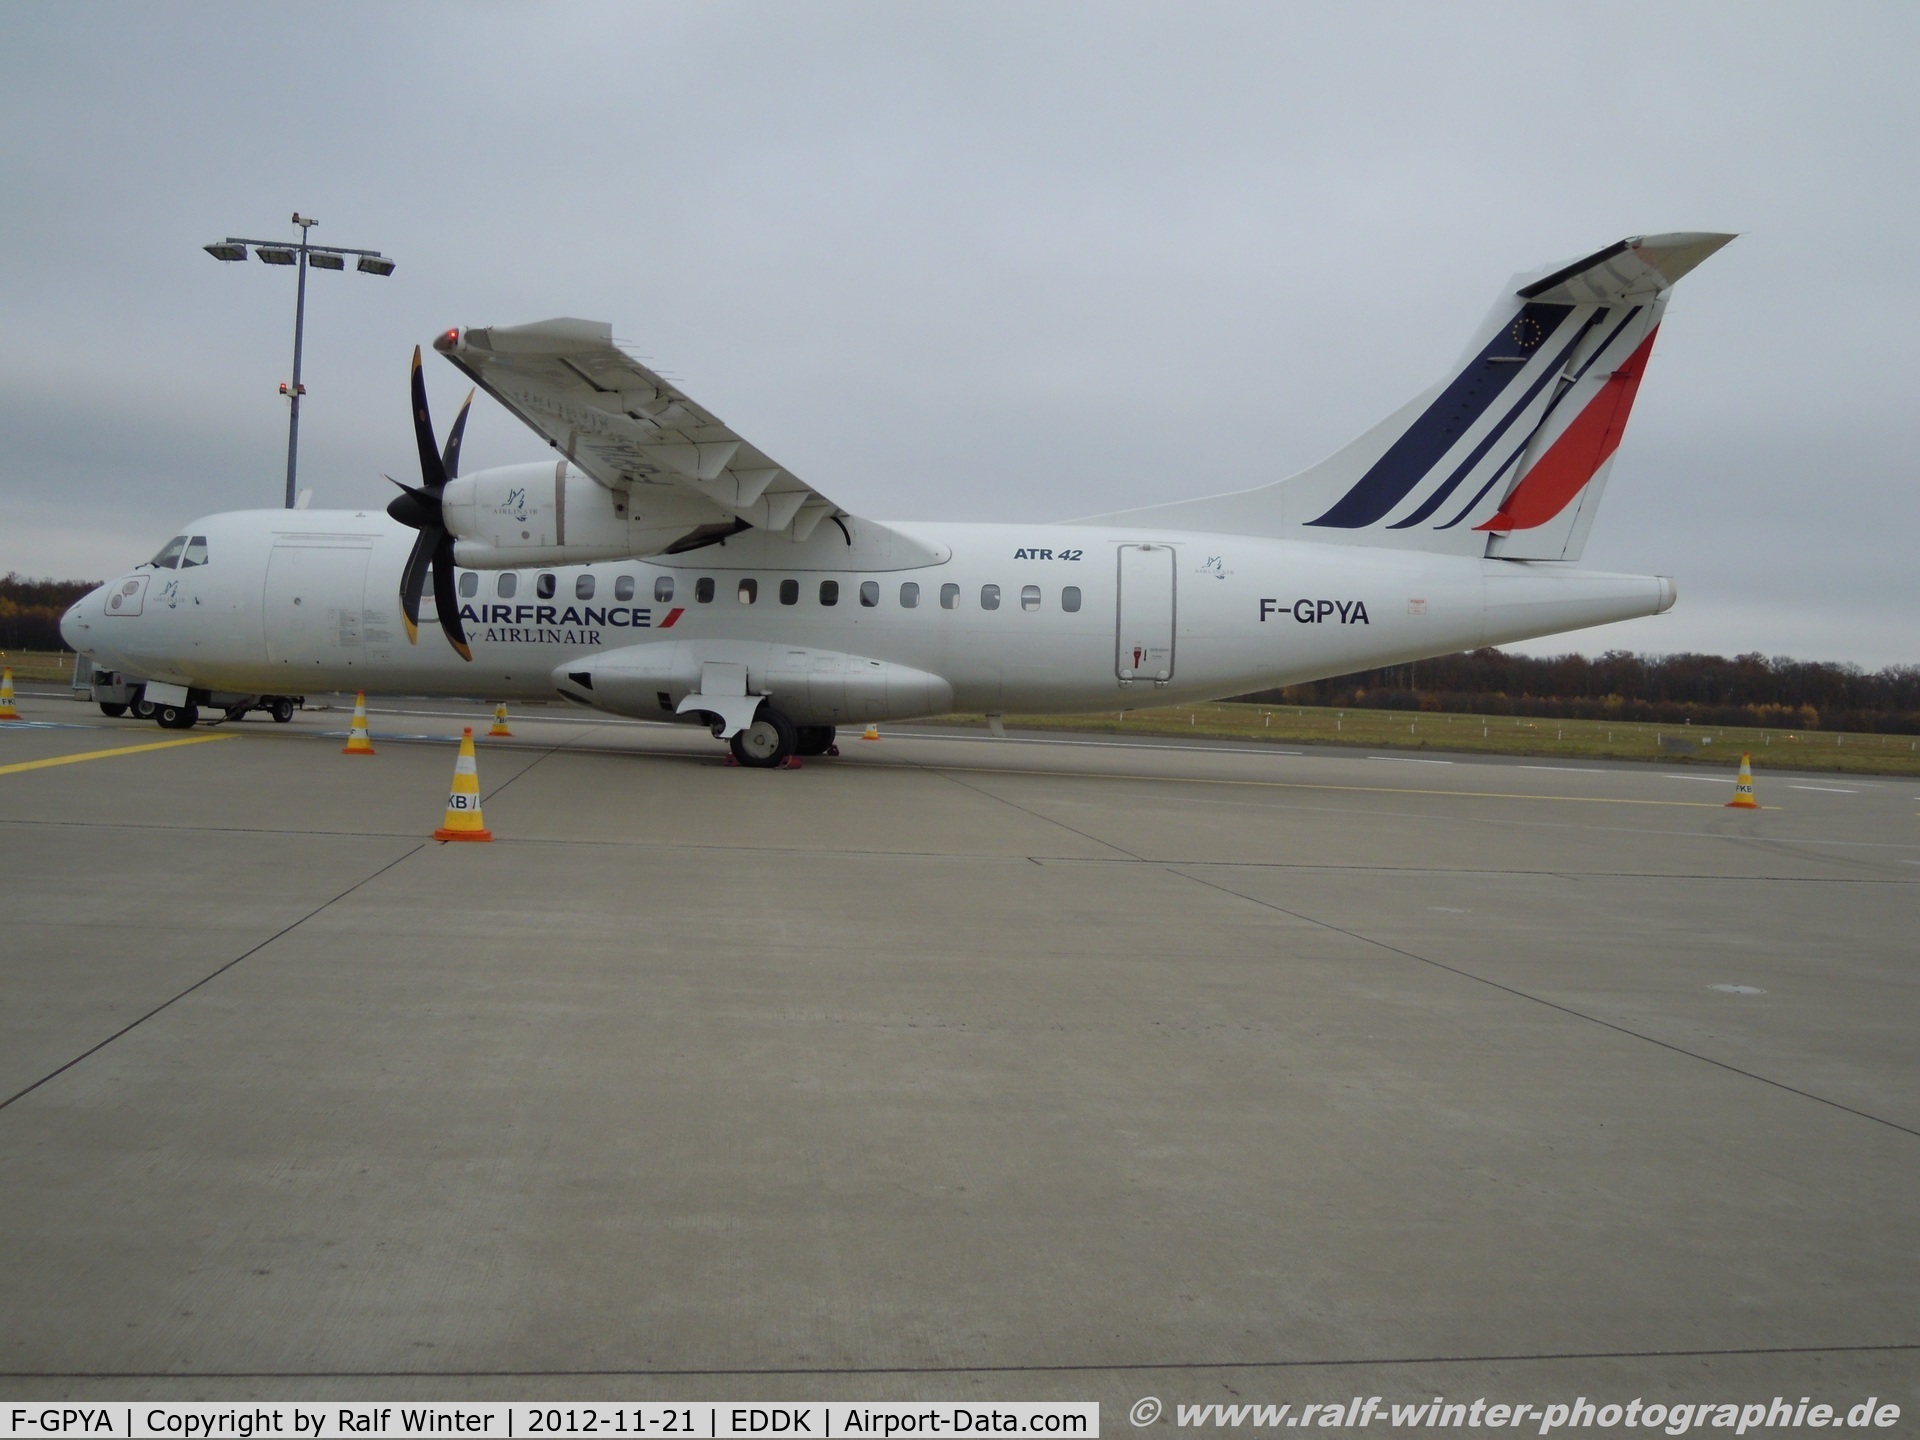 F-GPYA, 1995 ATR 42-500 C/N 457, ATR 42-500 - AN RLA Airlinair opf Air France AF colors - 457 - F-GPYA - 21.11.2012 - CGN